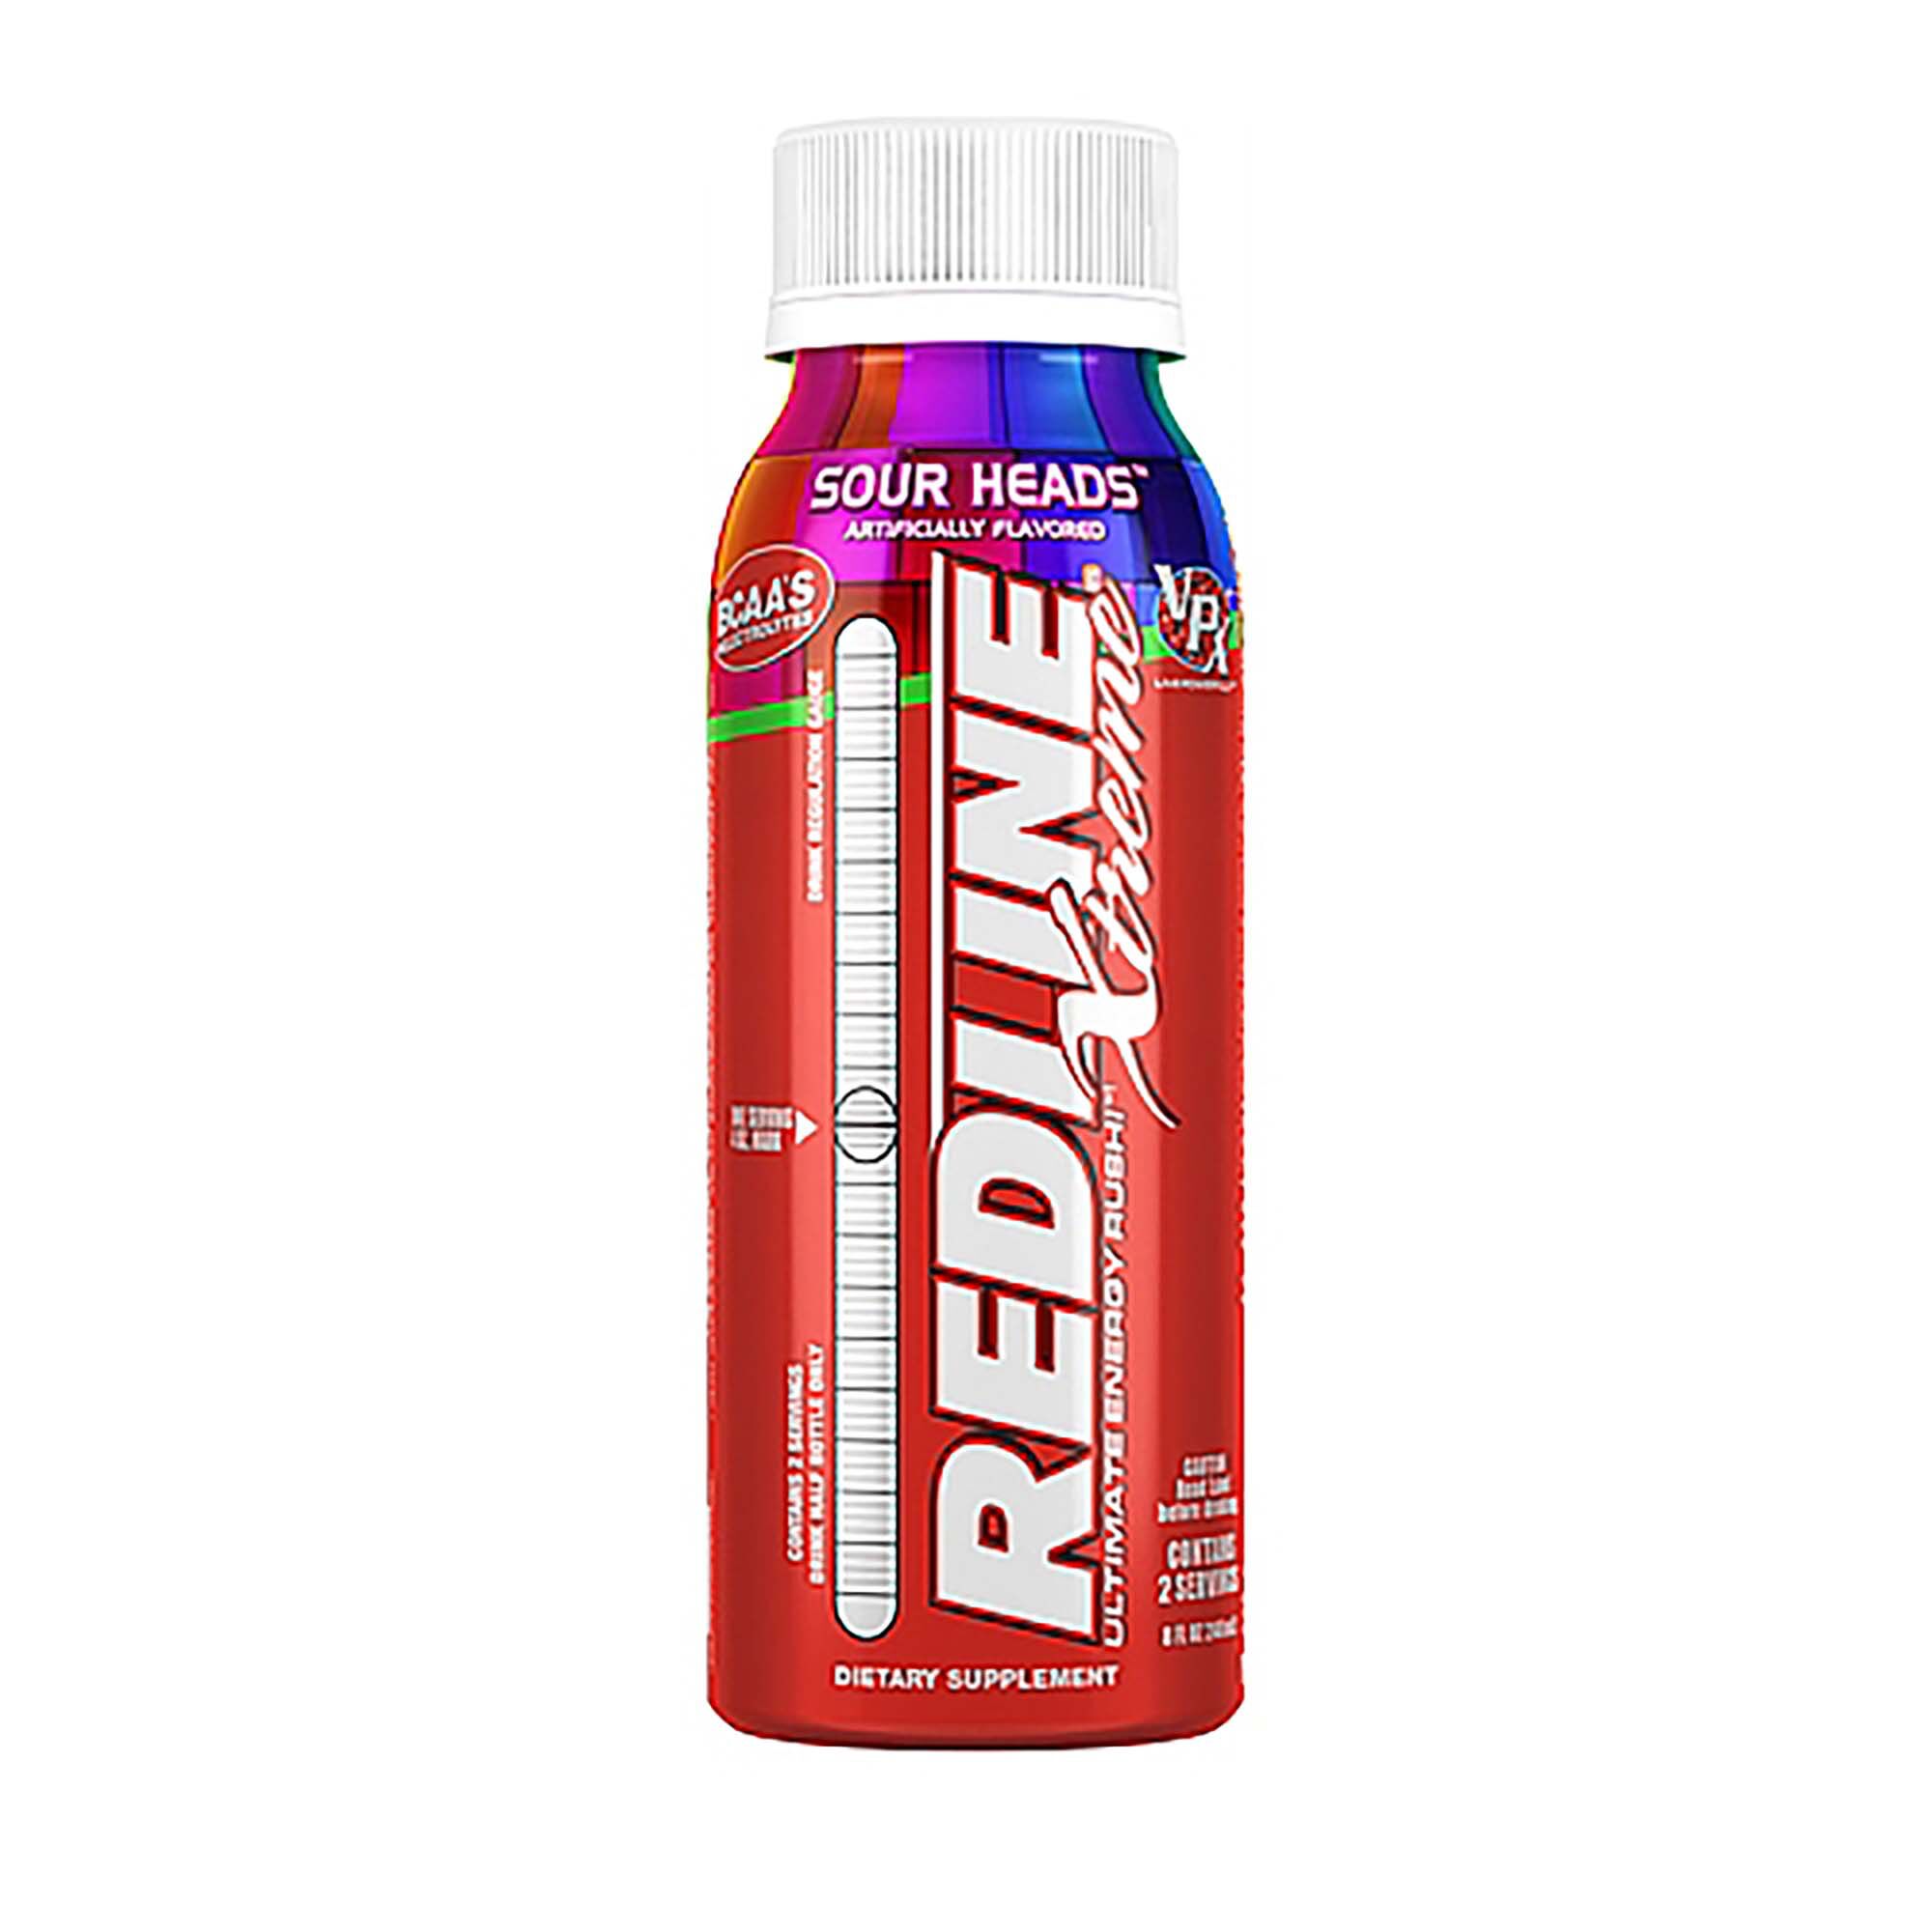 who makes redline energy drink